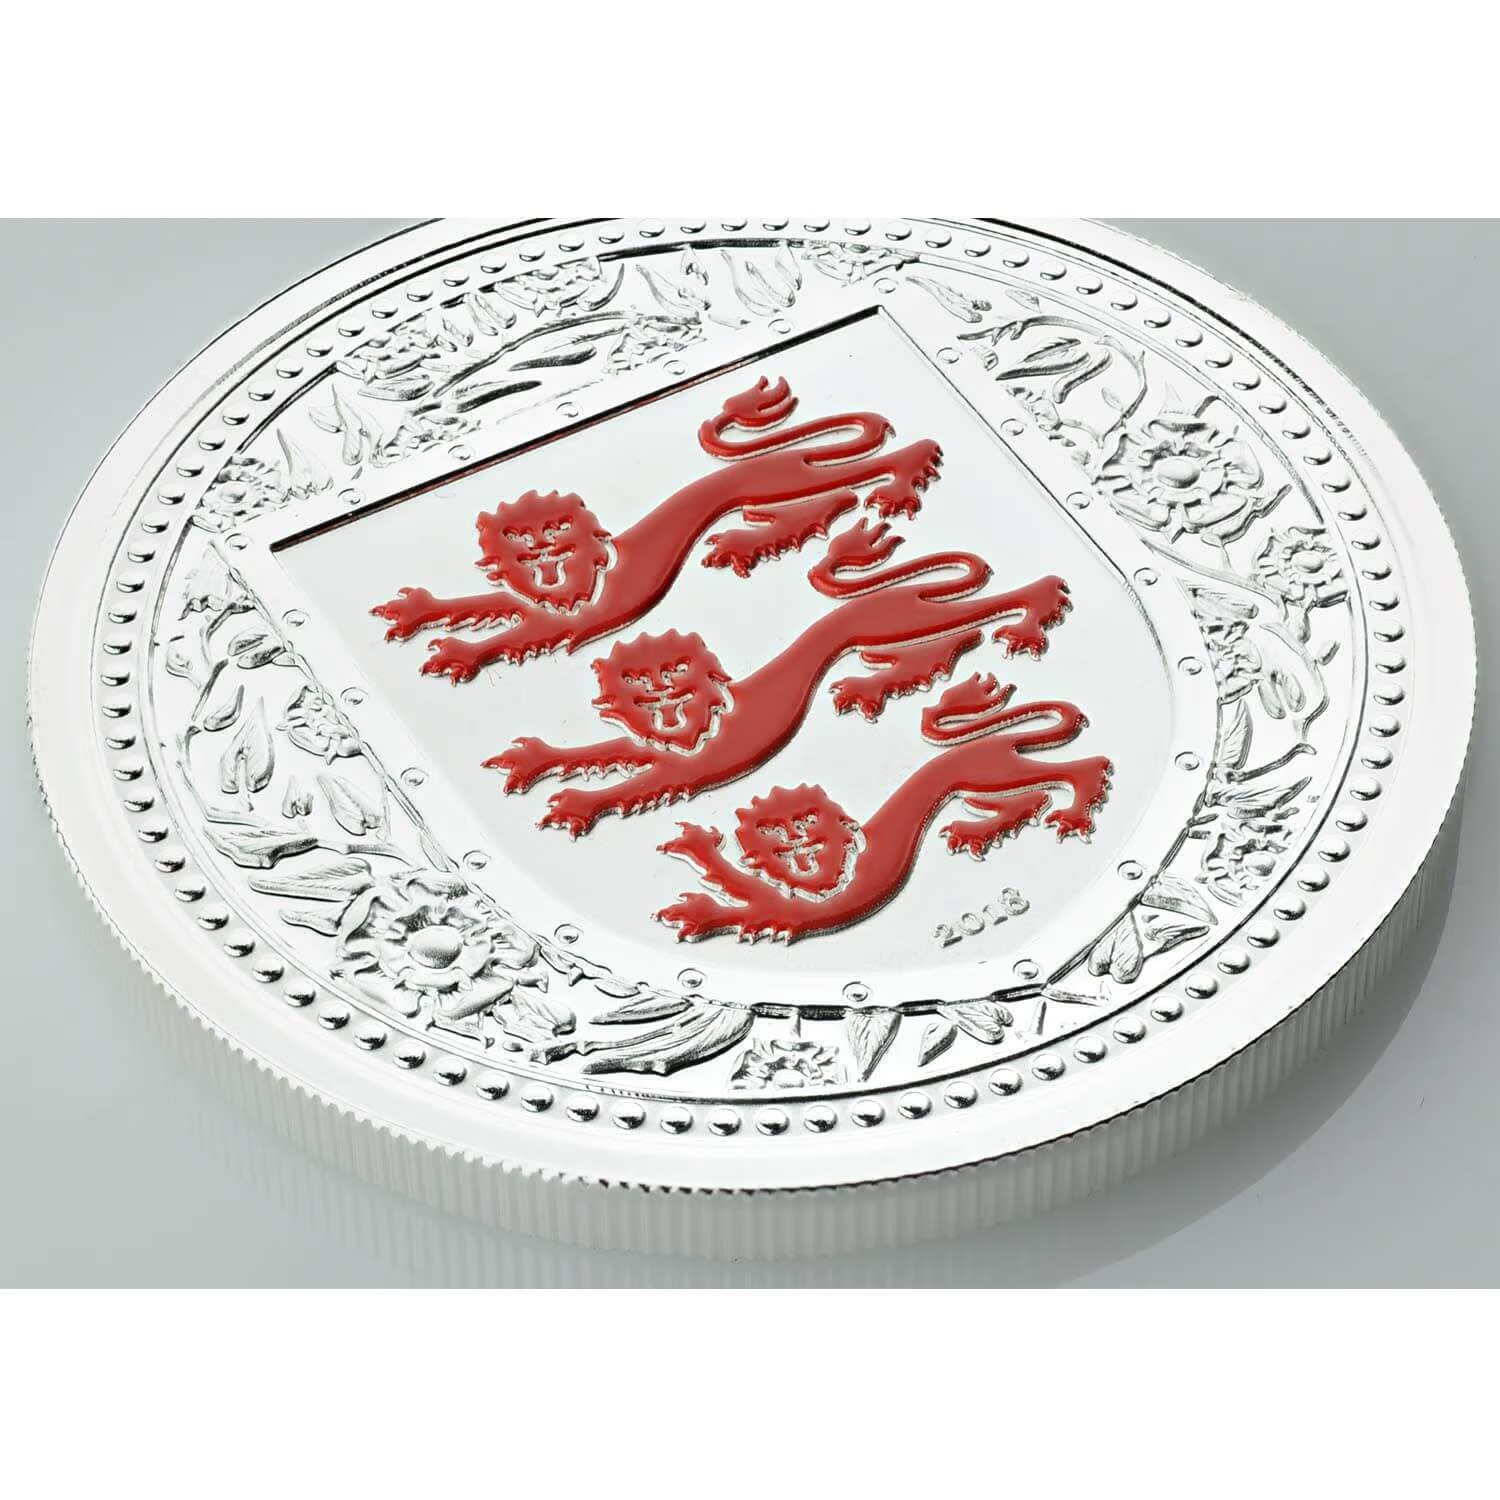 1 Oz Silver Coin 2018 Gibraltar £2 Royal Arms of England Color Proof - Red-classypw.com-3